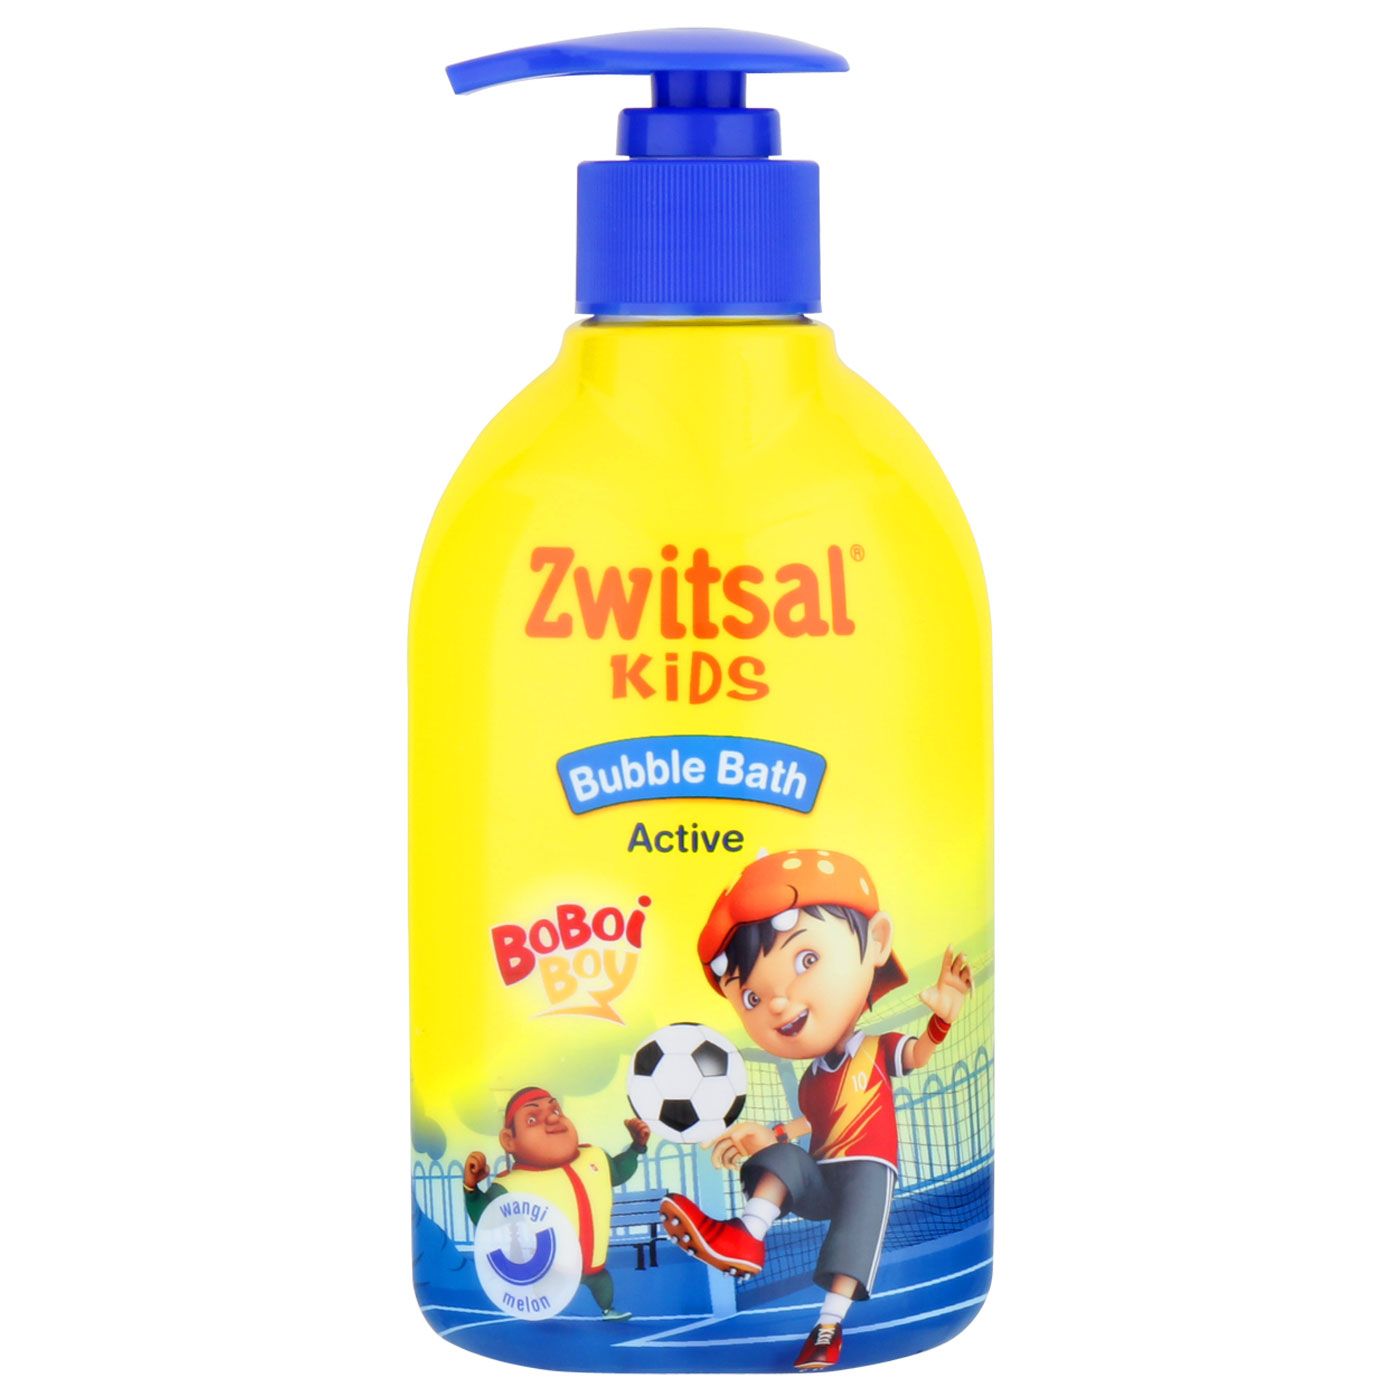 Zwitsal Kids Bath Action Pump 280ml NEW - 1